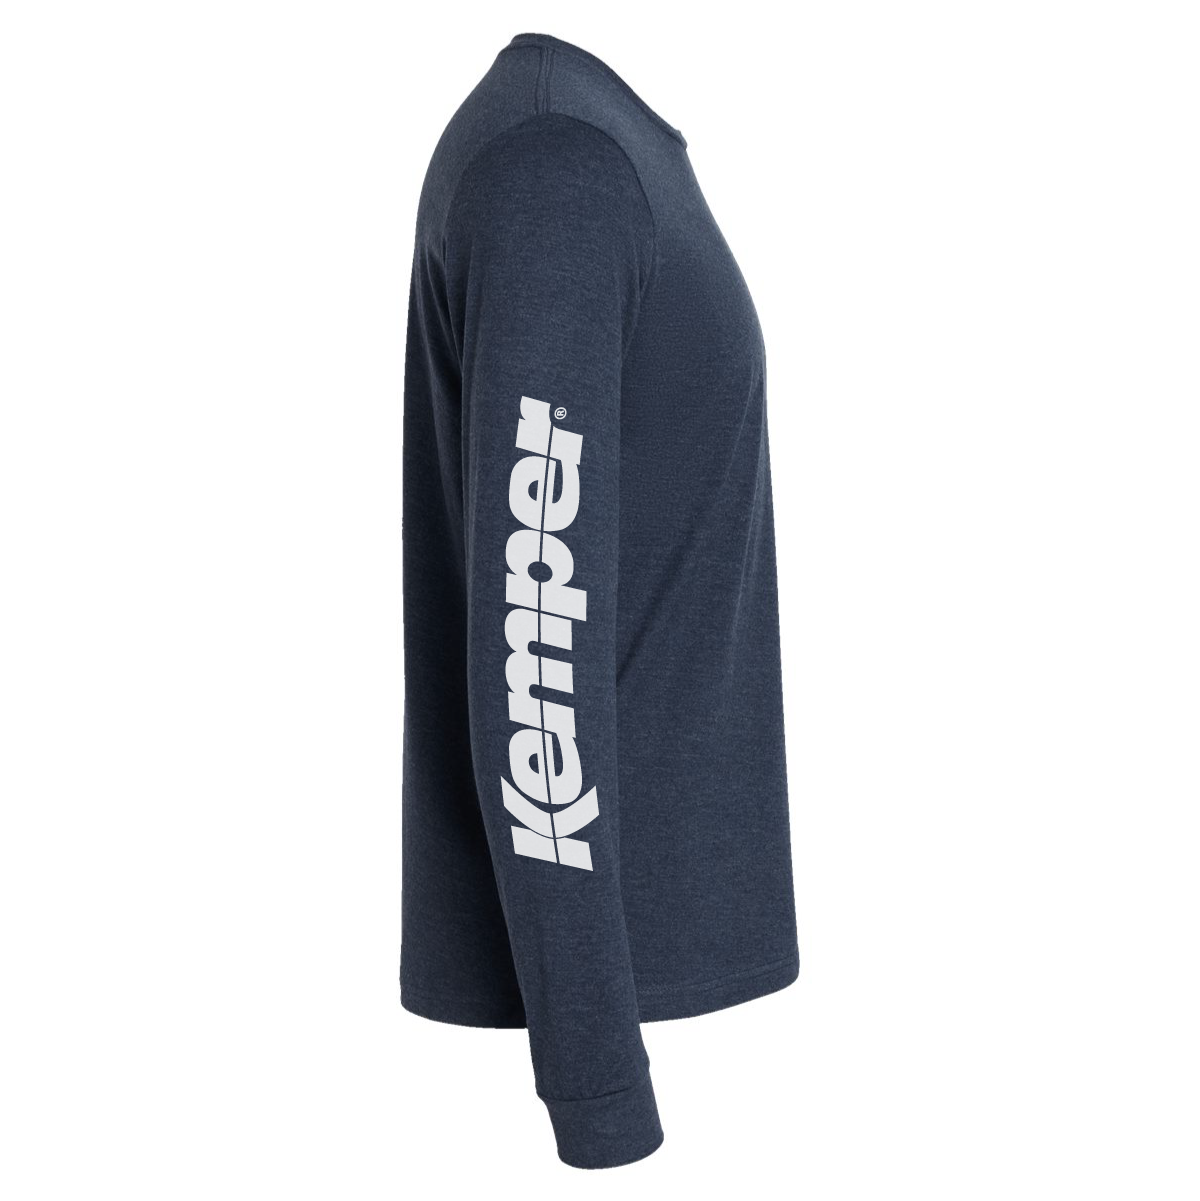 Kemper Men's Geo Logo Knockout Long Sleeve T-Shirt.